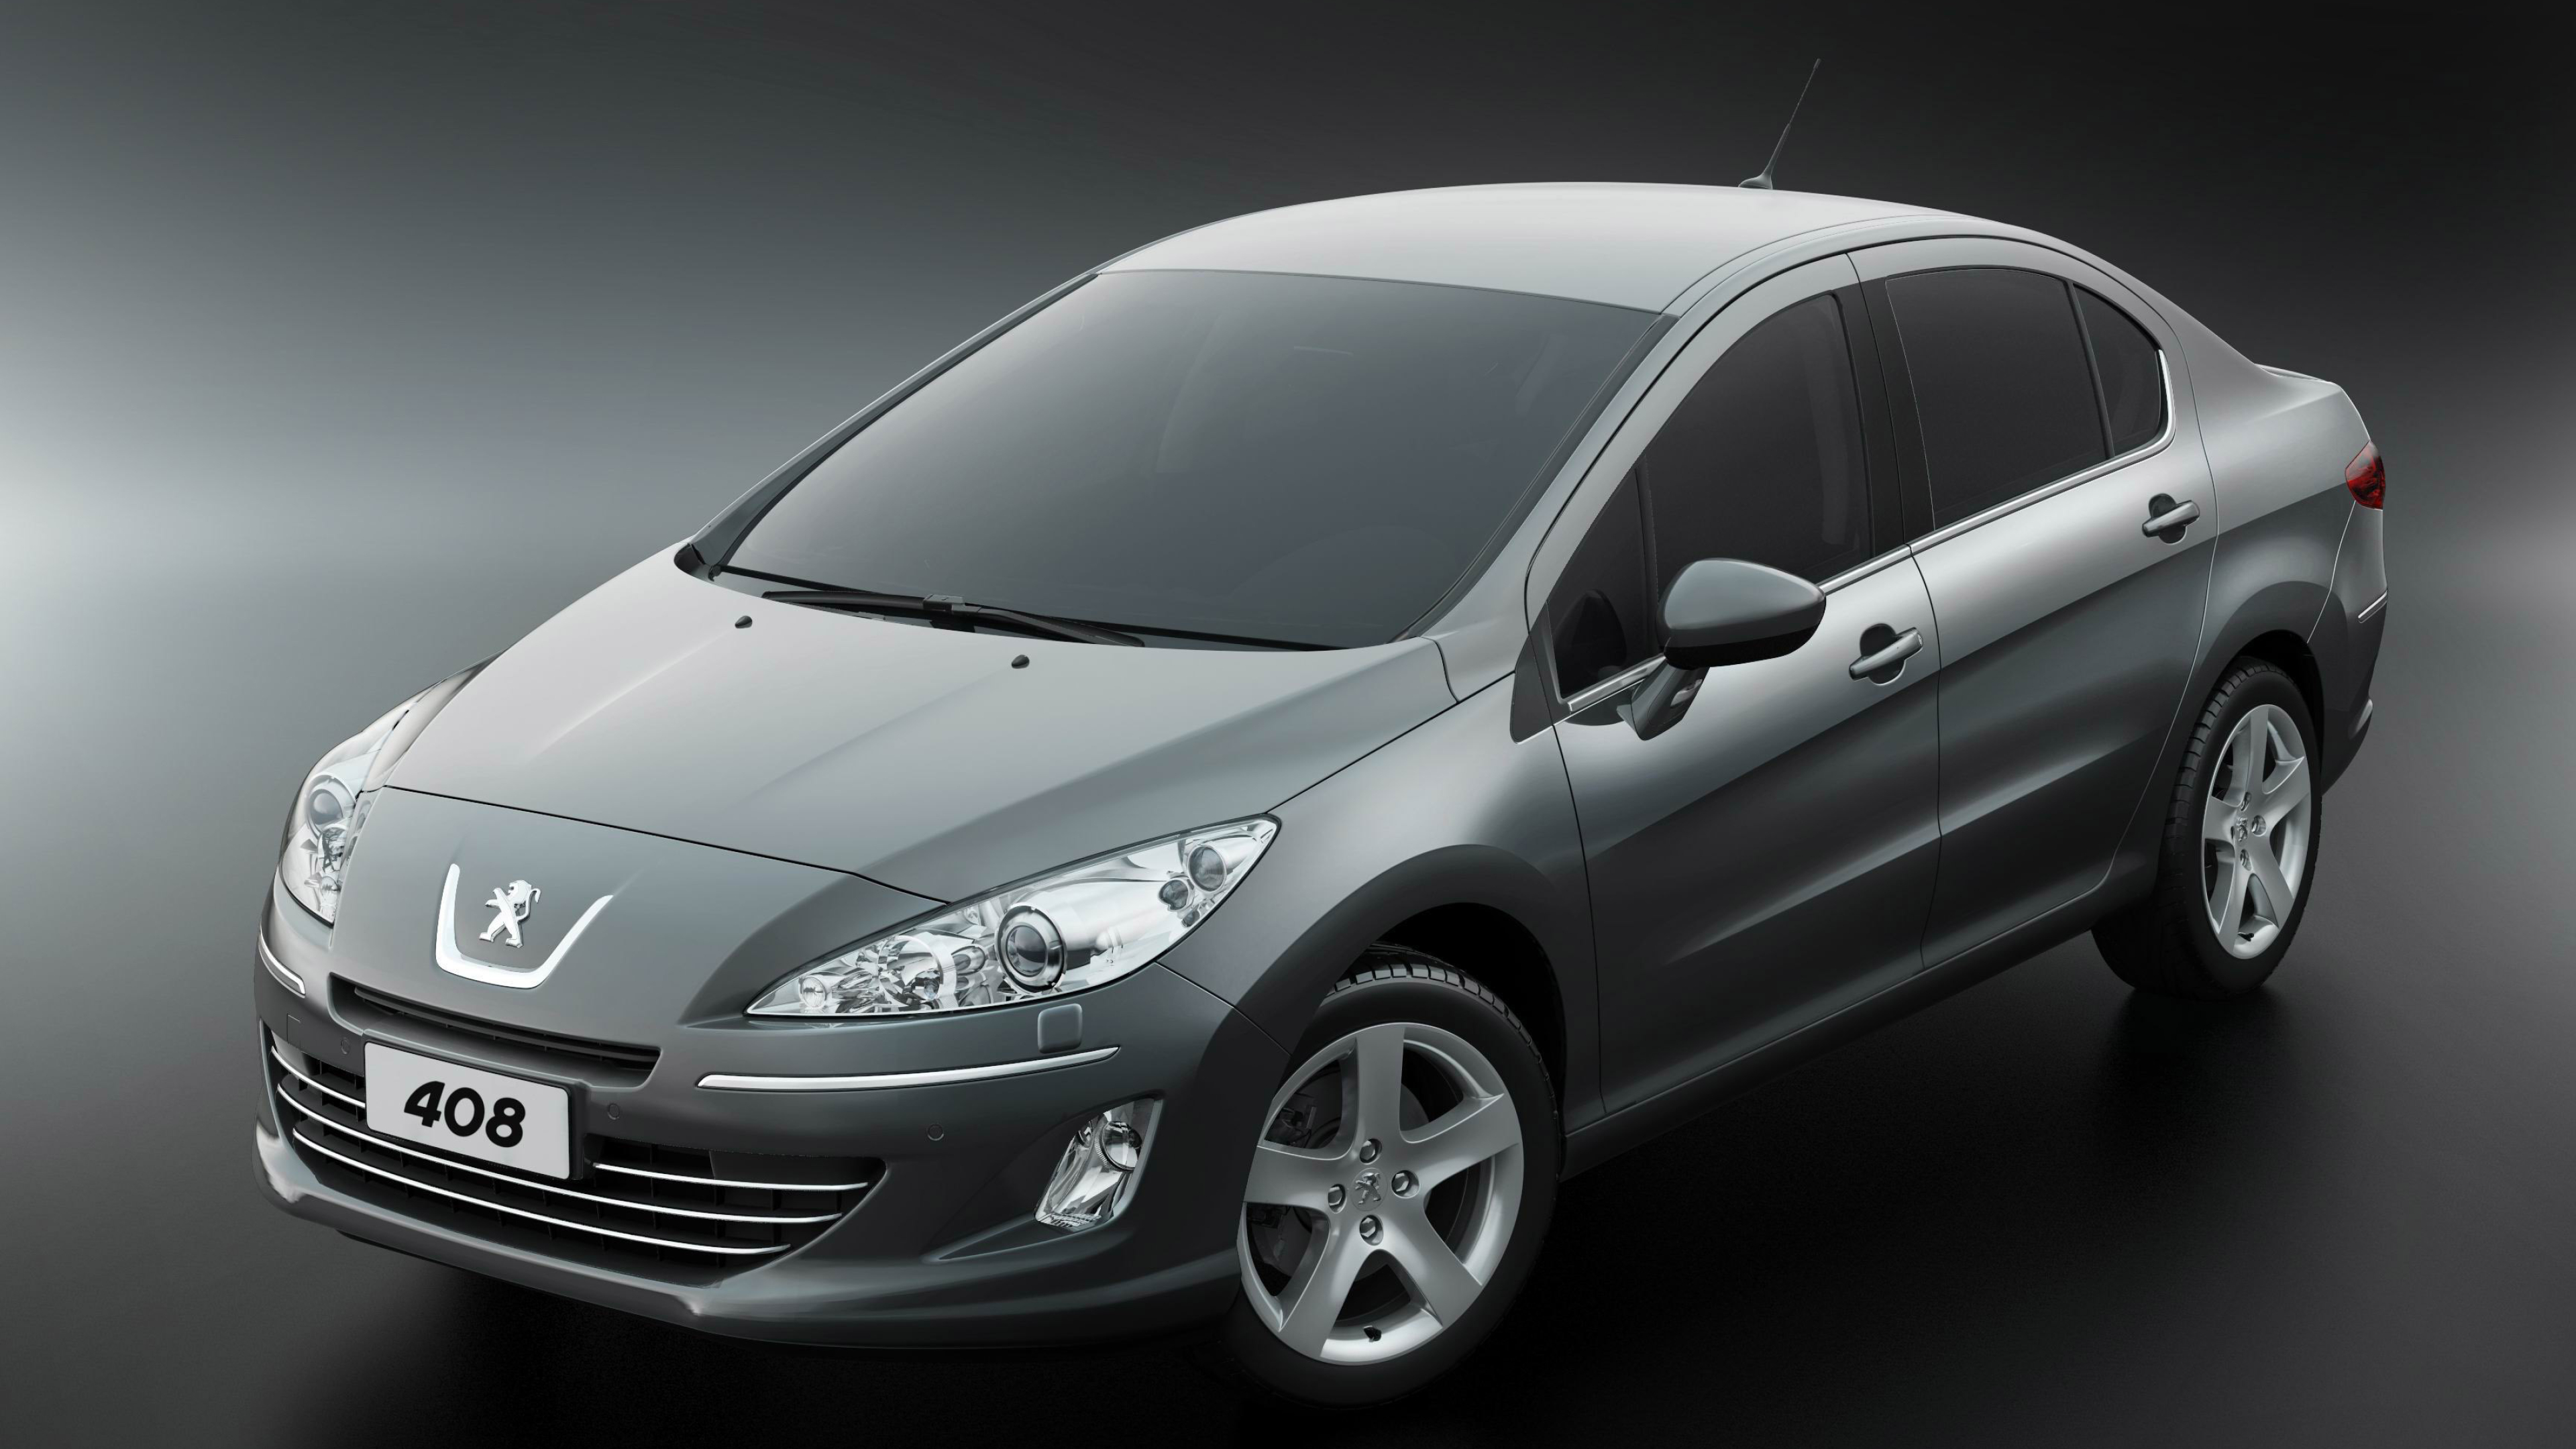 Peugeot 408, Official images, New model preview, 3840x2160 4K Desktop